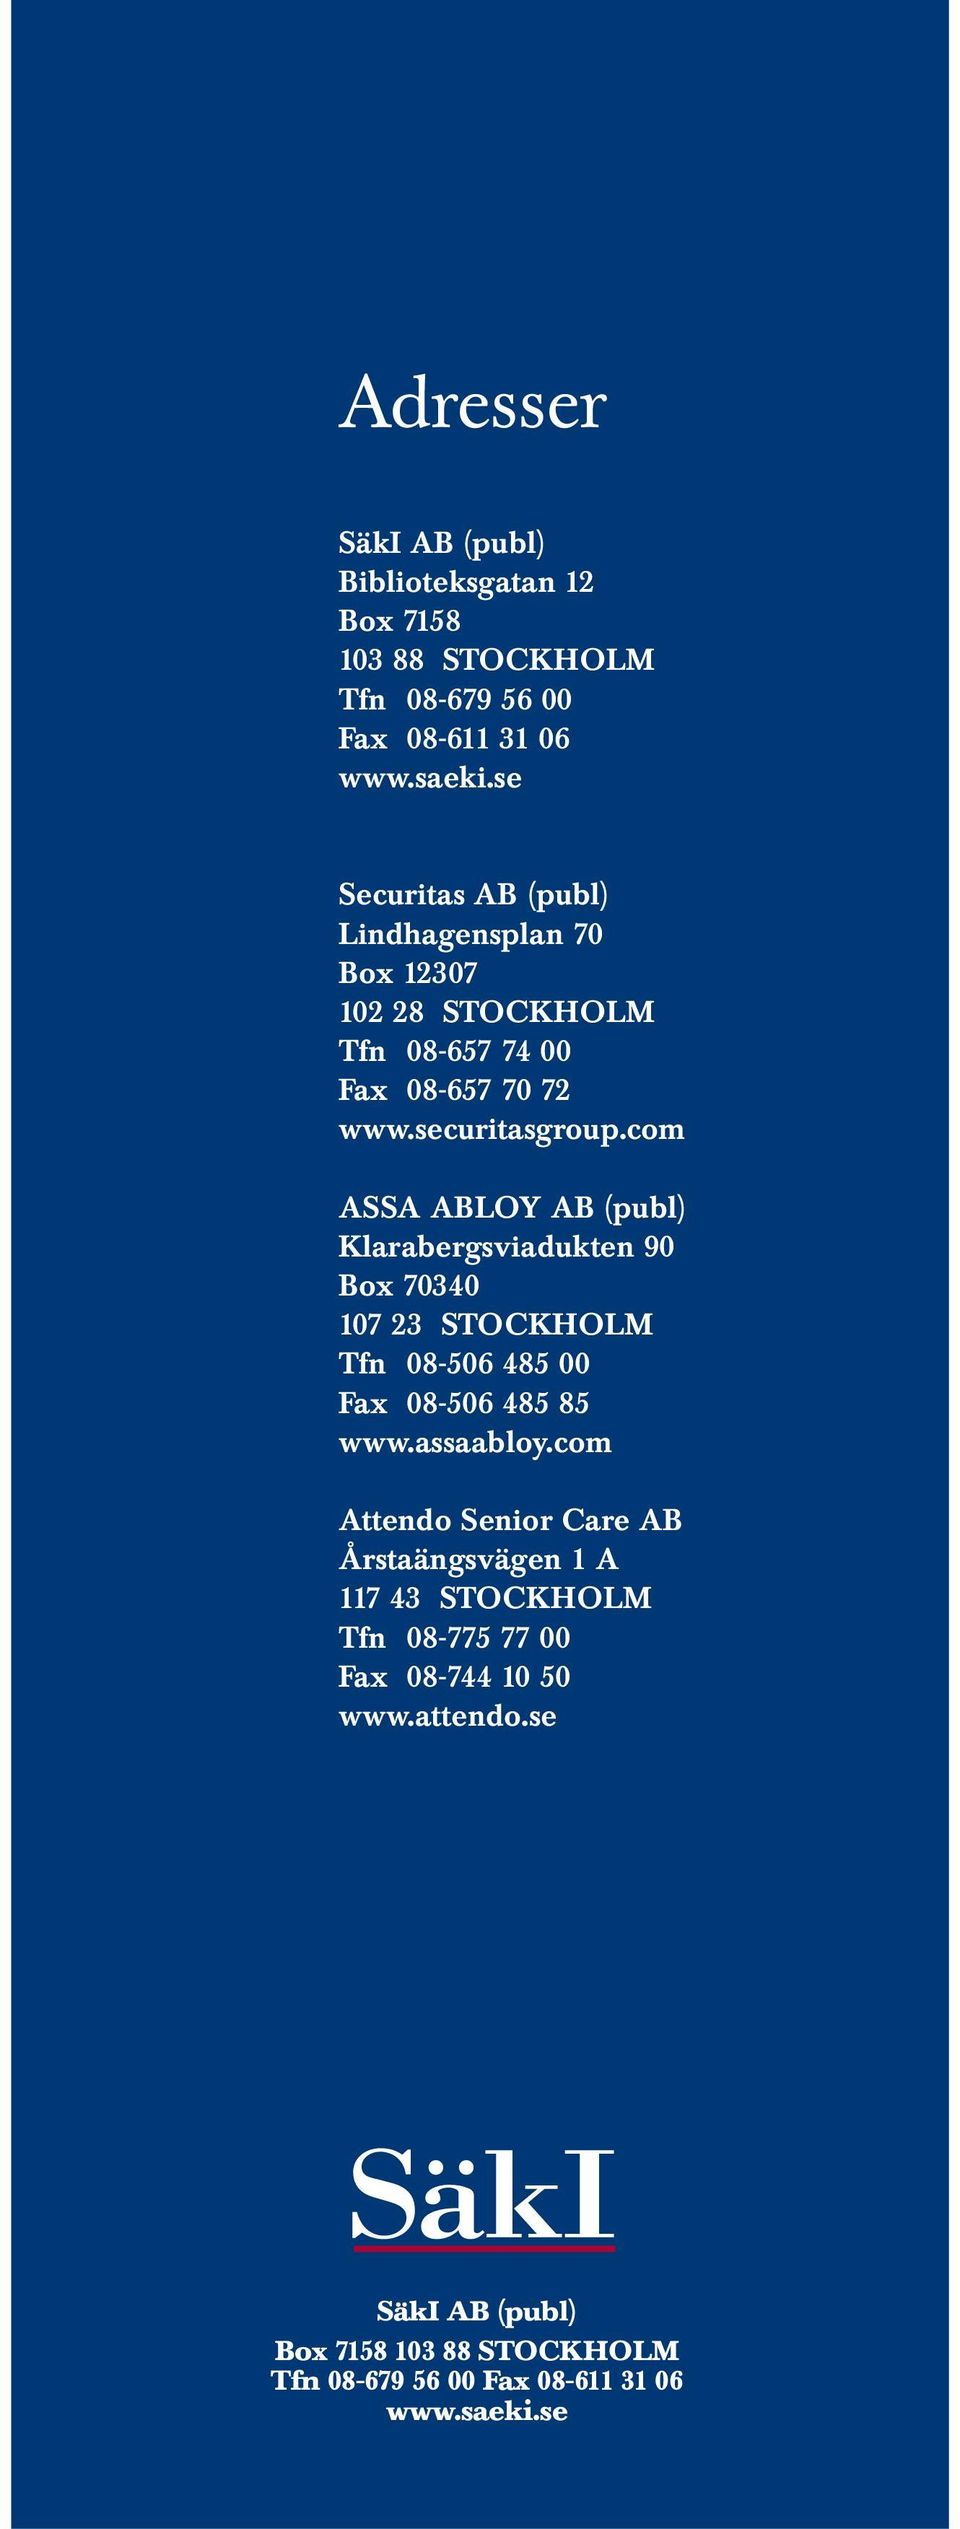 com ASSA ABLOY AB (publ) Klarabergsviadukten 90 Box 70340 107 23 STOCKHOLM Tfn 08-506 485 00 Fax 08-506 485 85 www.assaabloy.